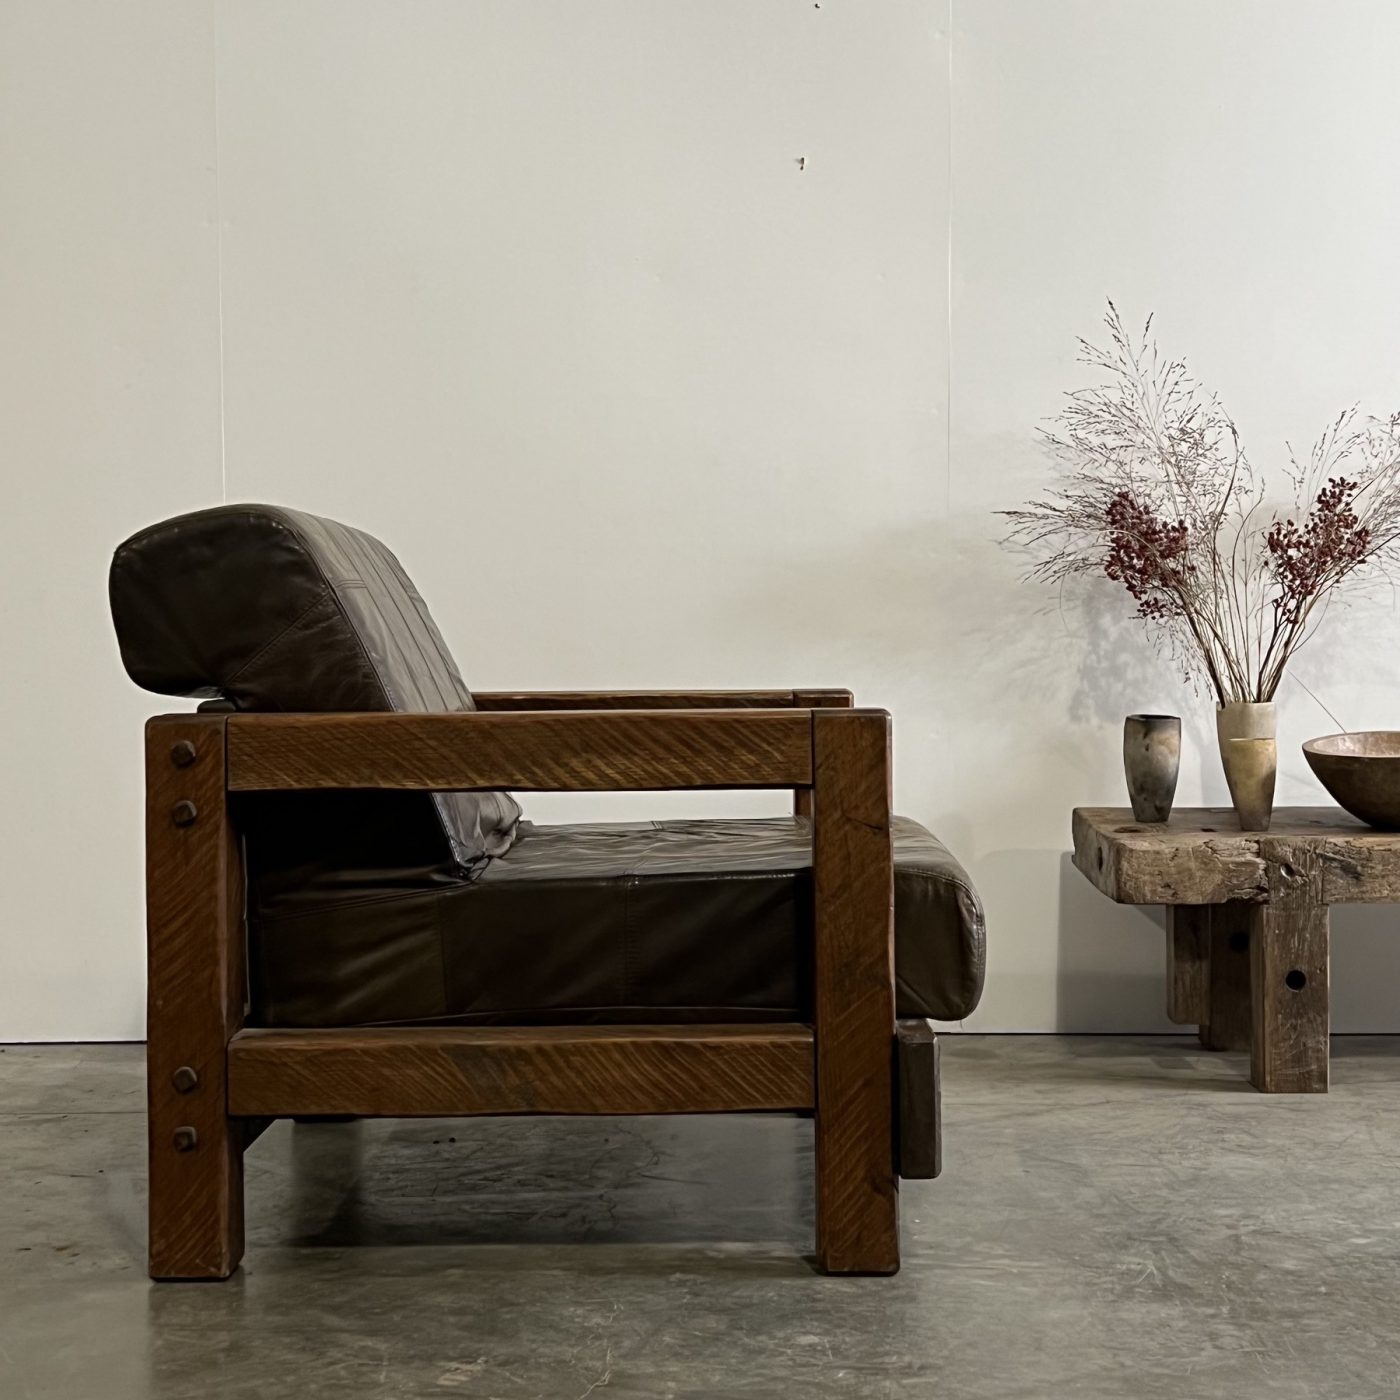 objet-vagabond-leather-armchair0011